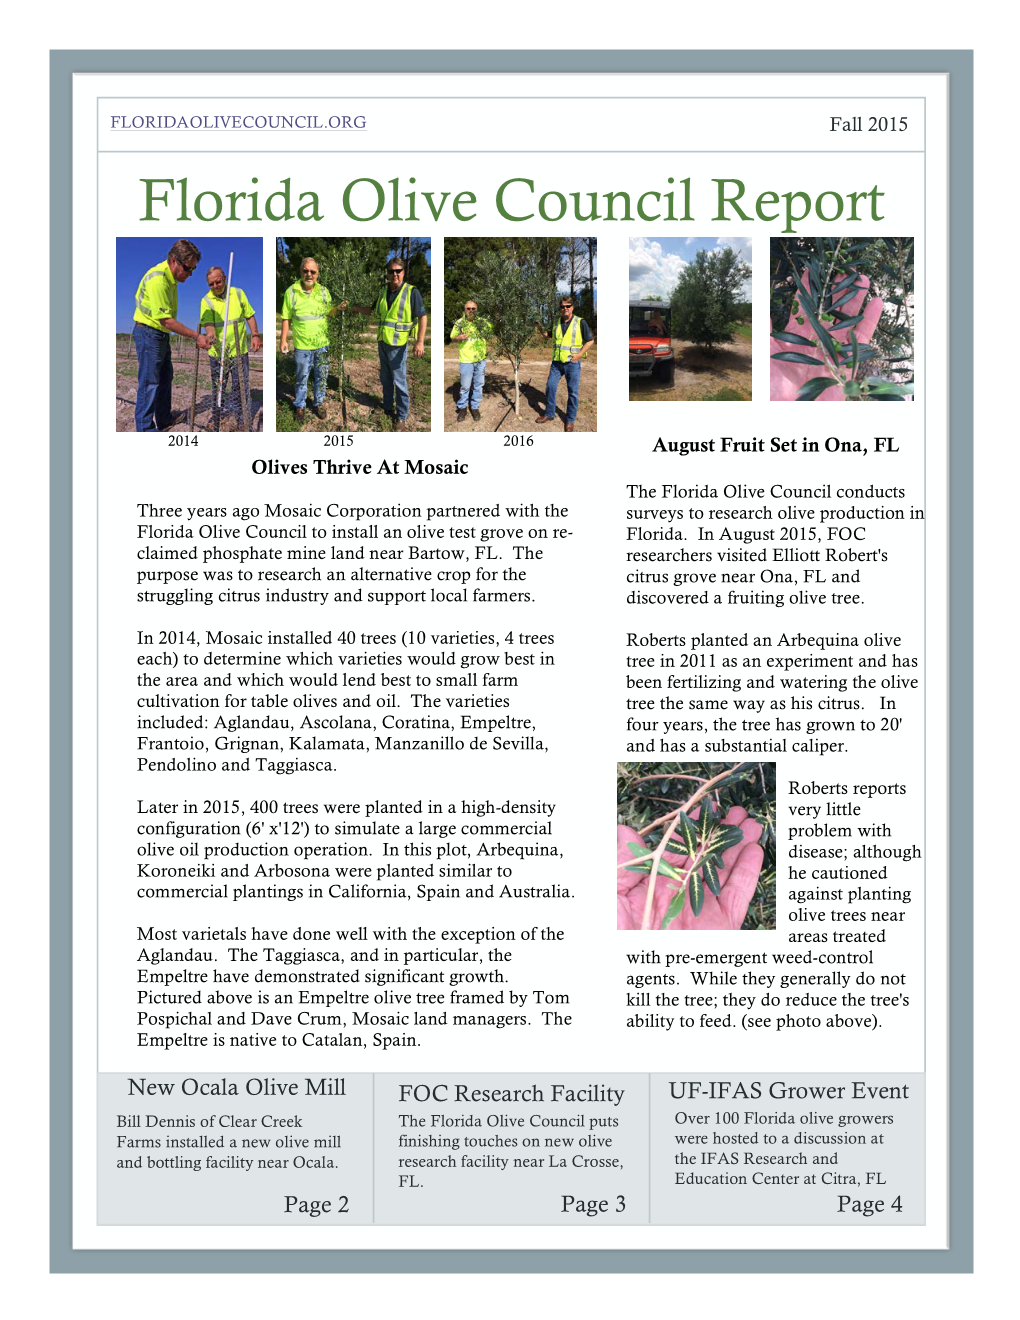 Fall 2015 Florida Olive Council Report